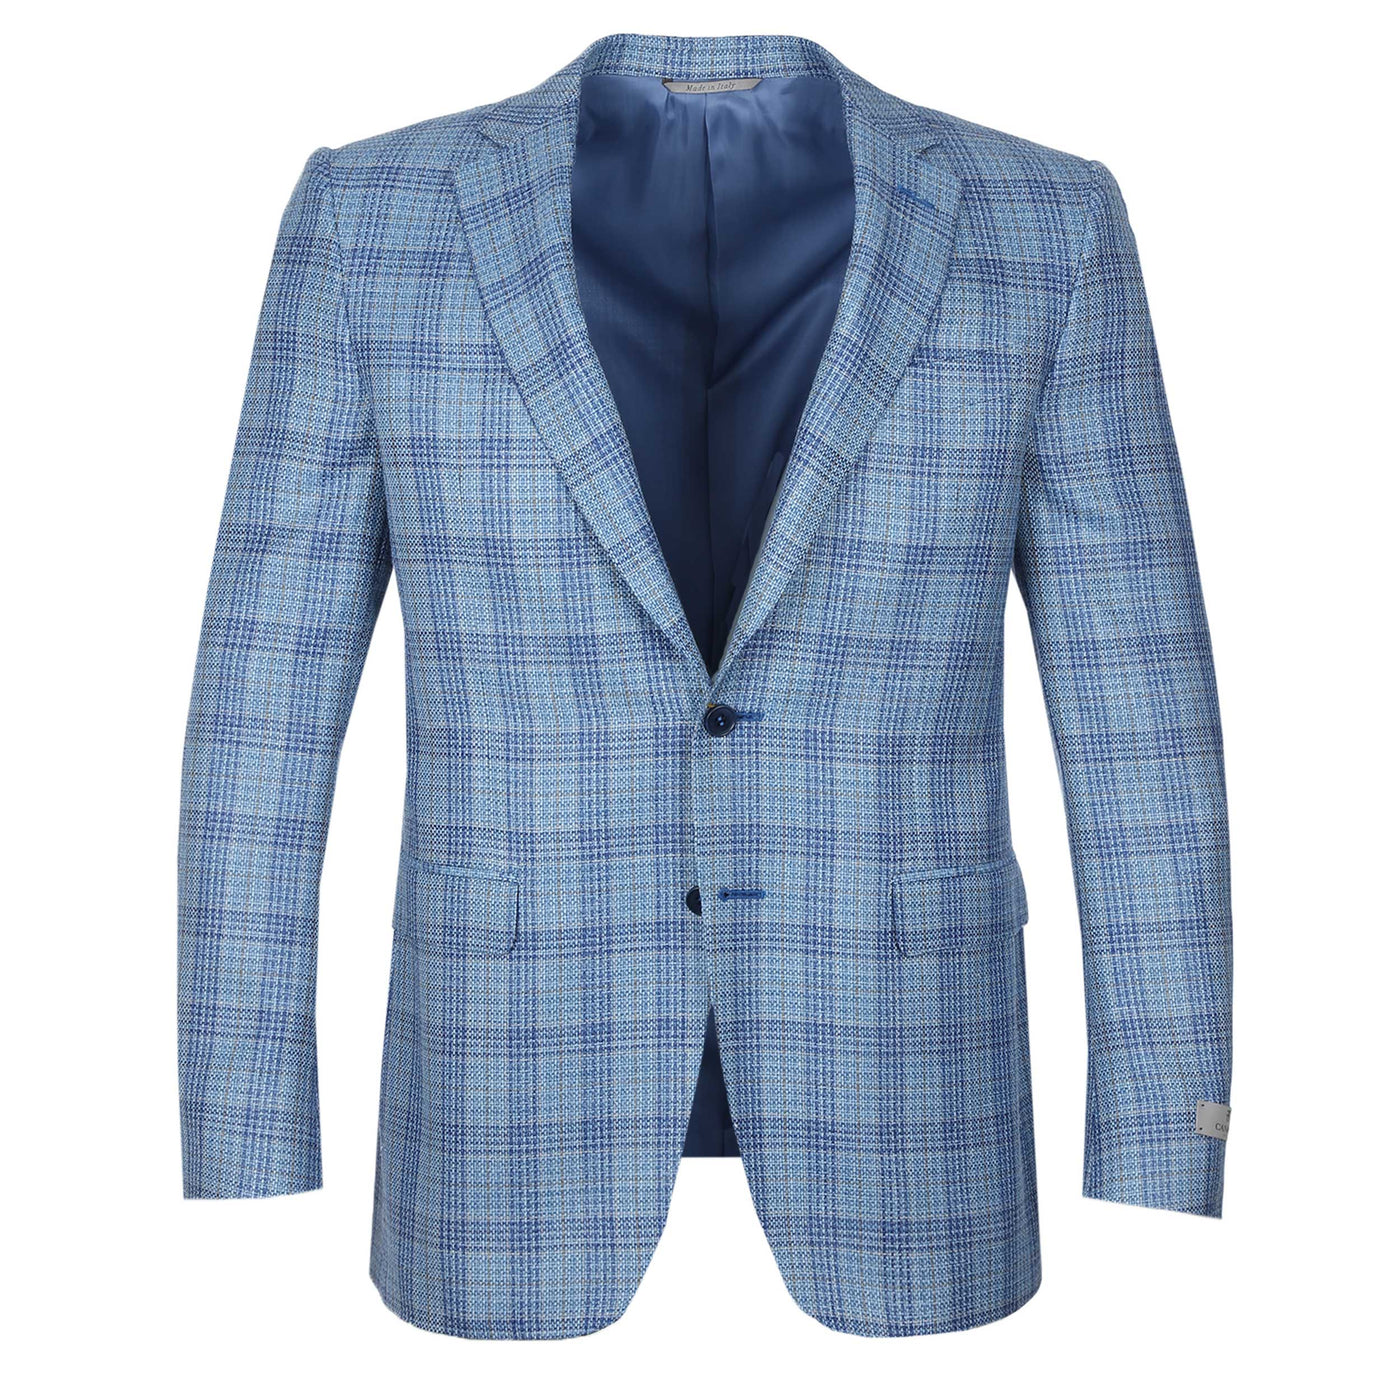 Canali Notch Lapel Milano Jacket in Sky Blue Check